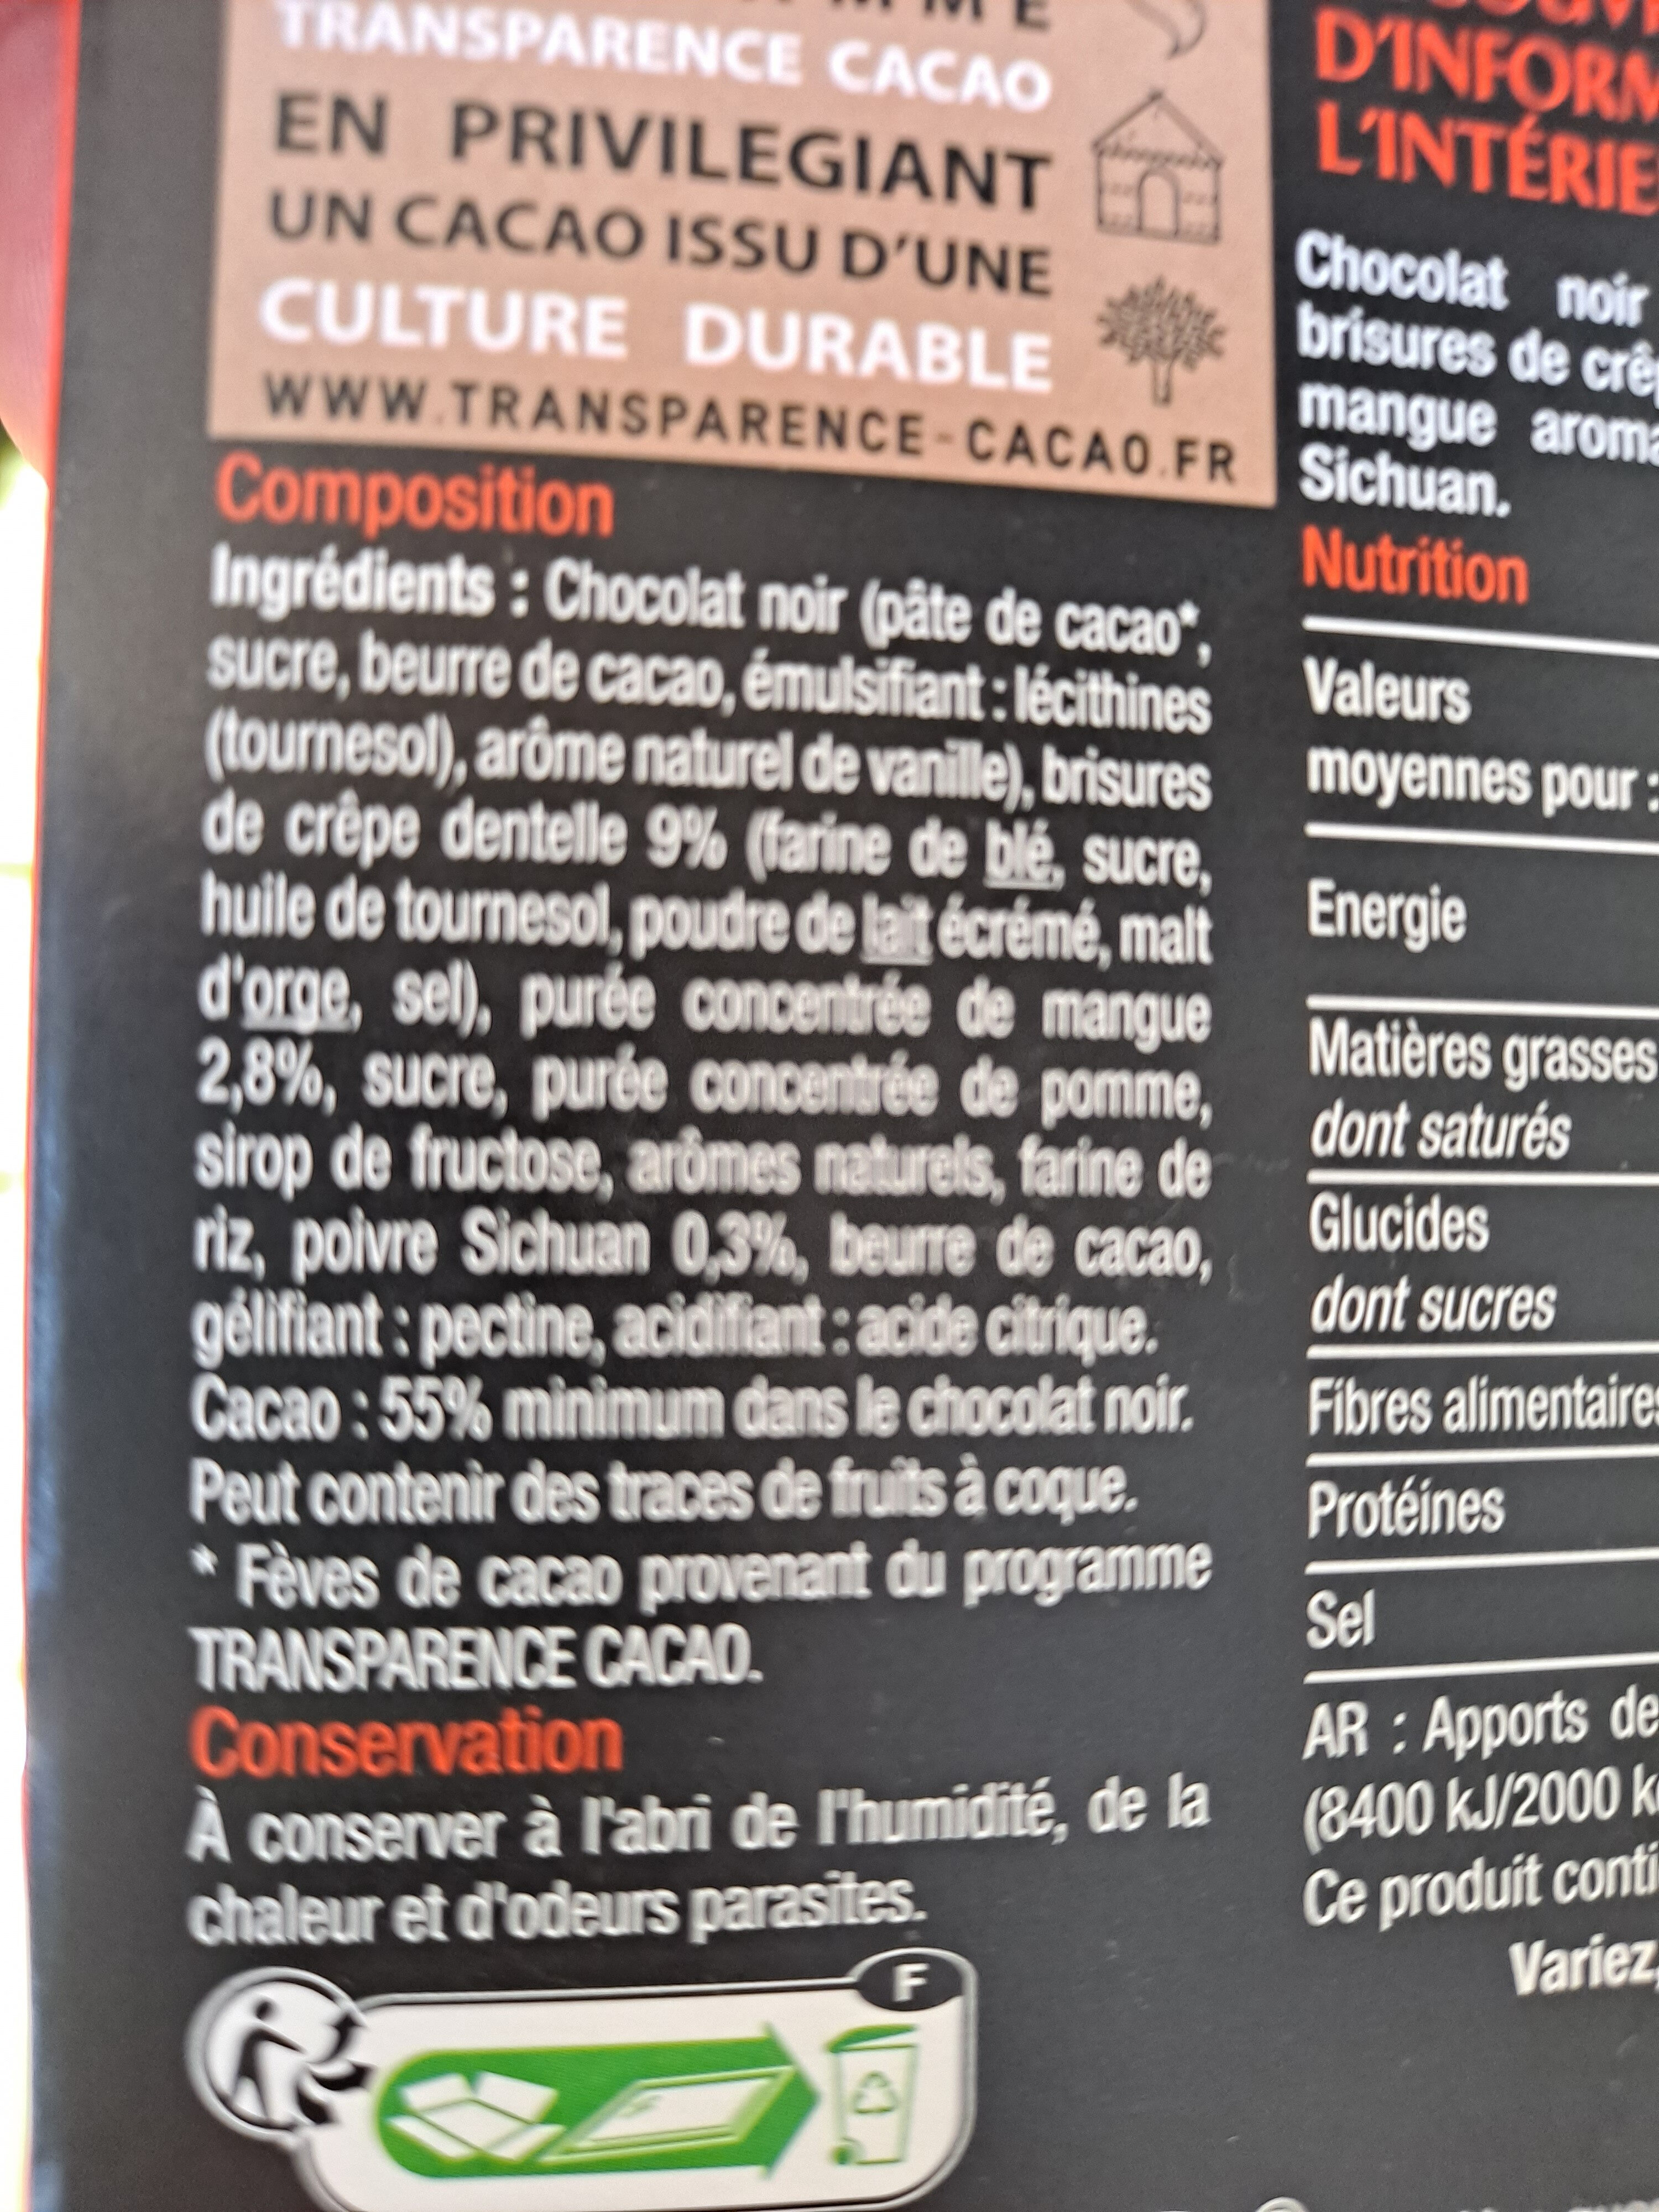 Saveur mangue & poivre sichuan noir - Ingredients - fr